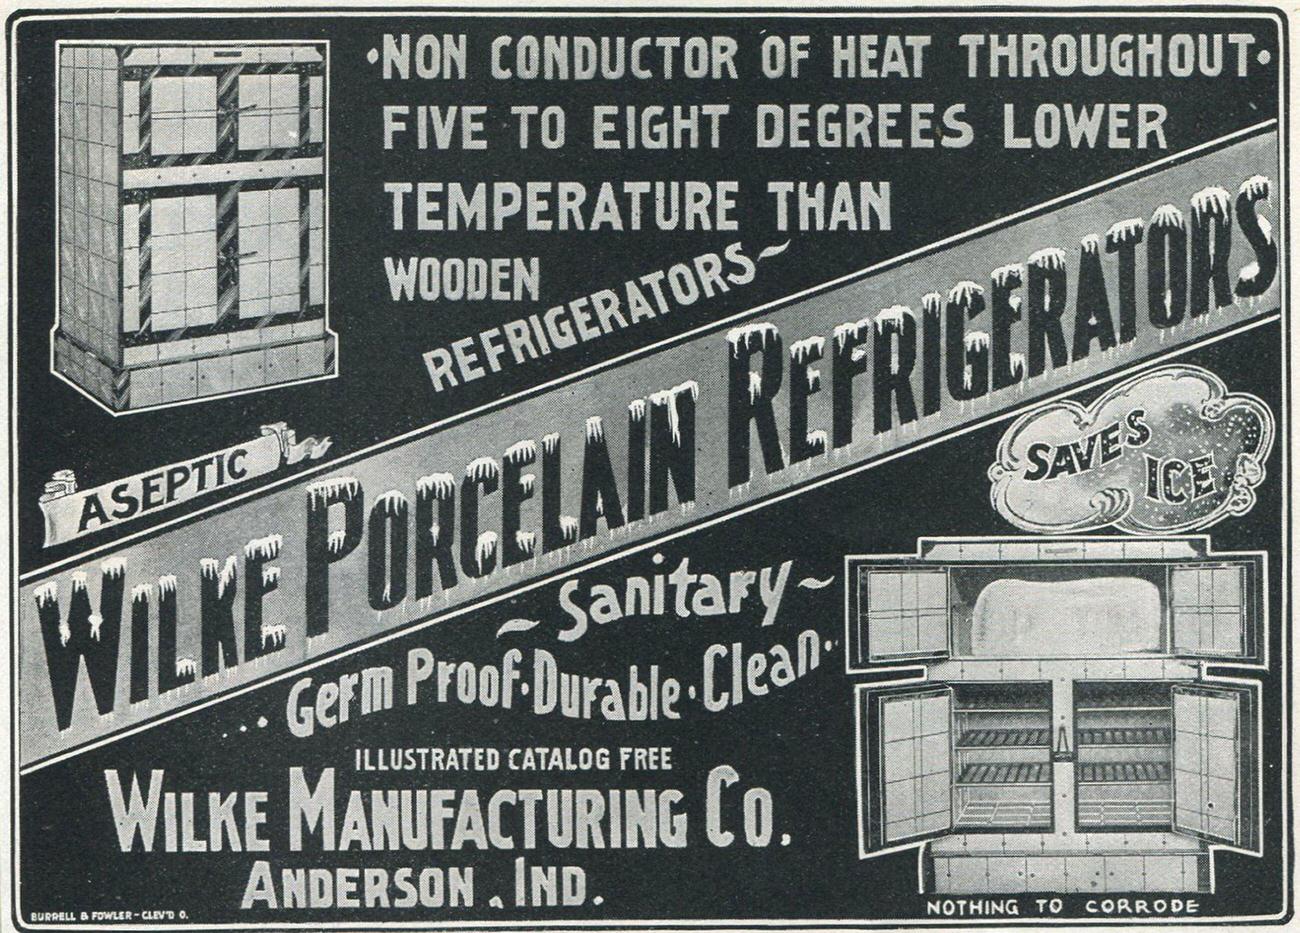 Wilke Porcelain Refrigerators ad, Wilke Manufacturing Company, 1901.